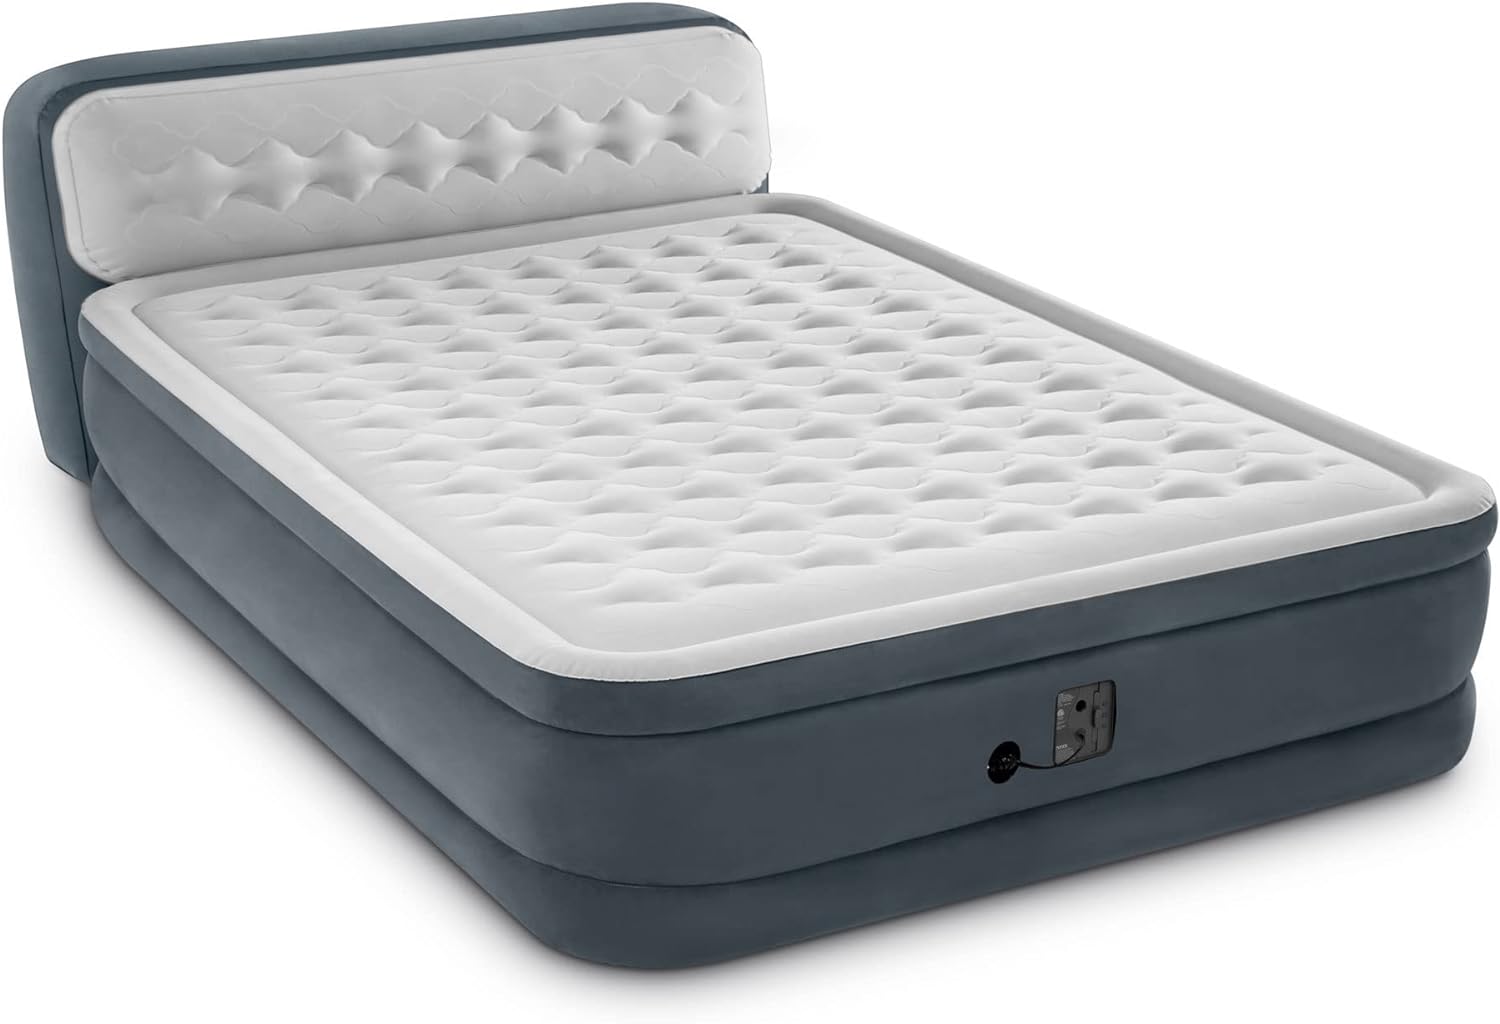 Intex Dura-Beam Deluxe 18-Inch Queen-Sized Air Mattress Comforting Bed